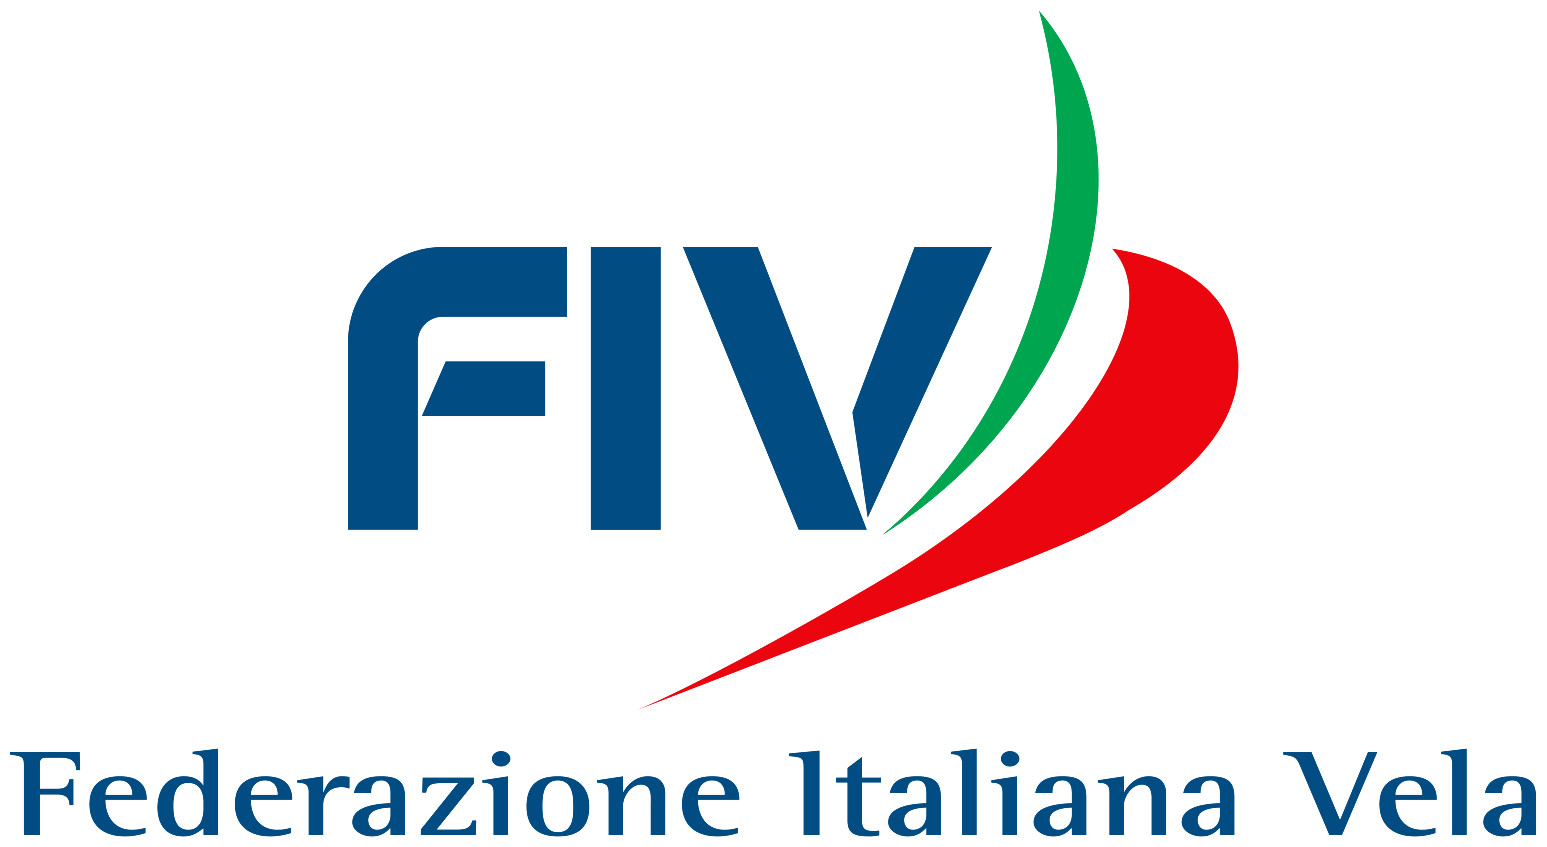 images/LOGO_FIV_Federazione_Italiana_Vela.png